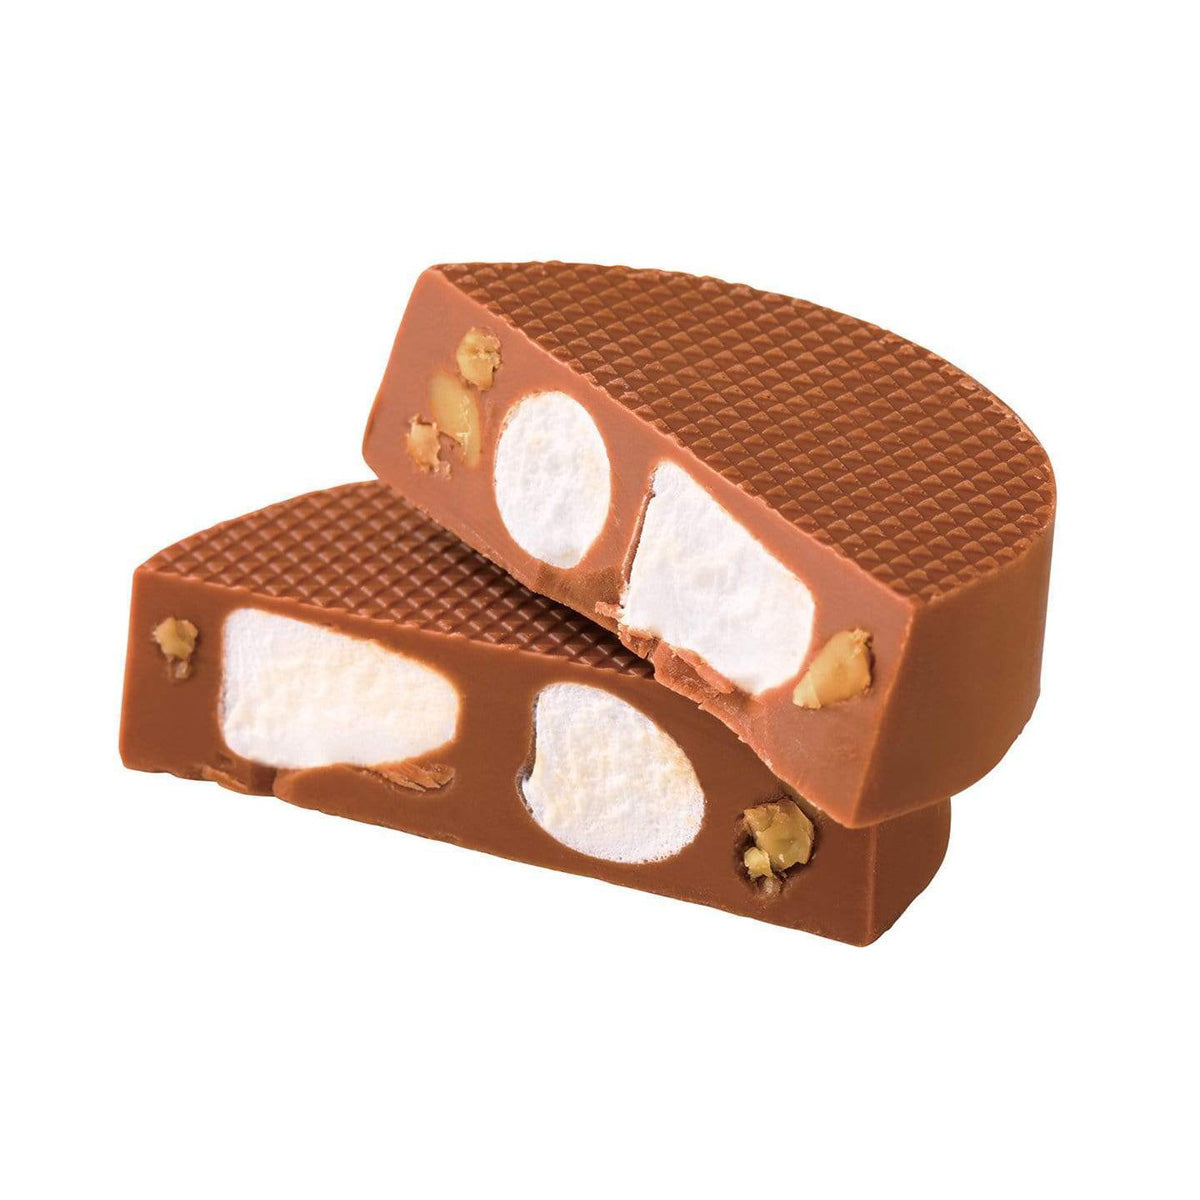 ROYCE' Chocolate - Petit Kurumaro Chocolat (5 Pcs) - Image shows brown chocolate discs filled with marshmallows and walnuts.